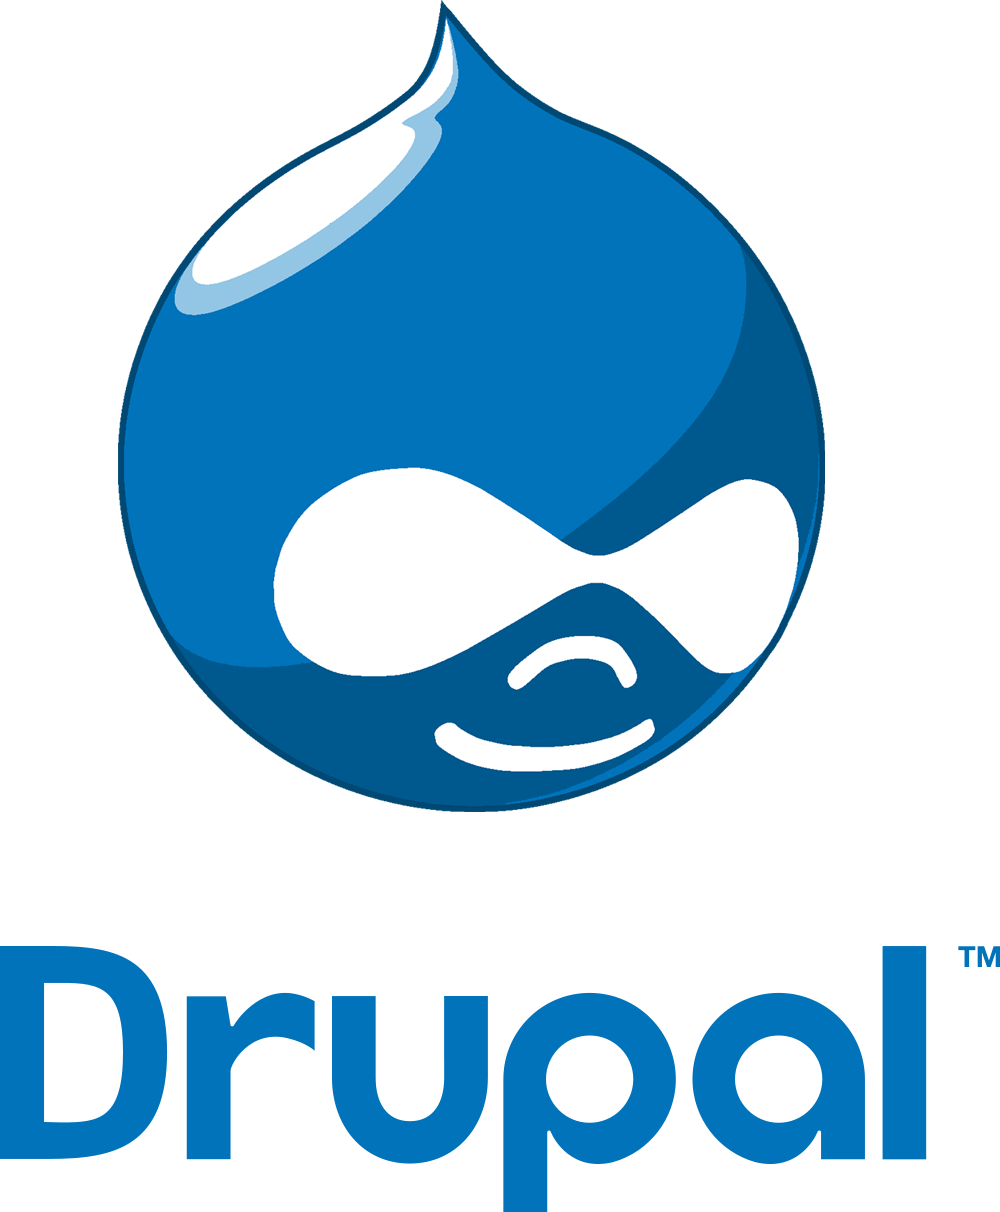 Logo Drupal 7